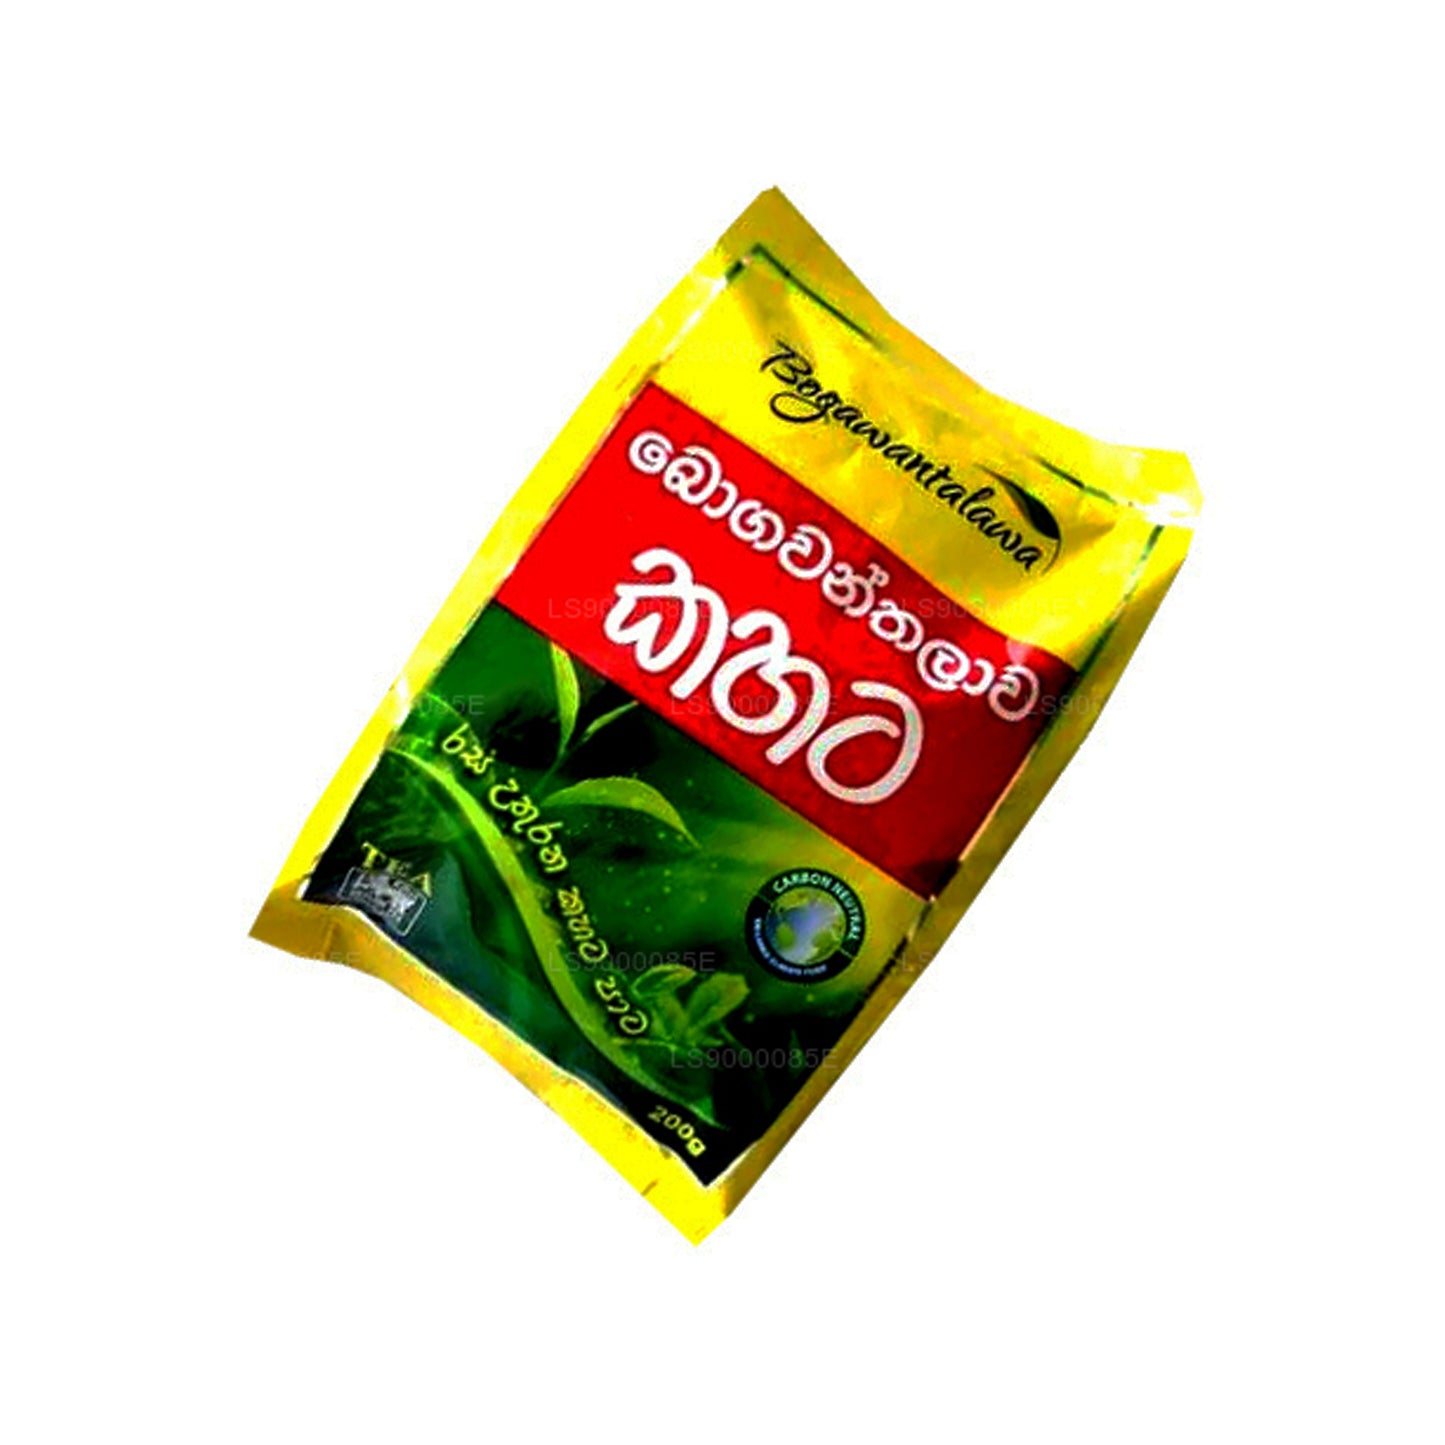 Bogawantalawa Kahata Leafy Tea (200g)